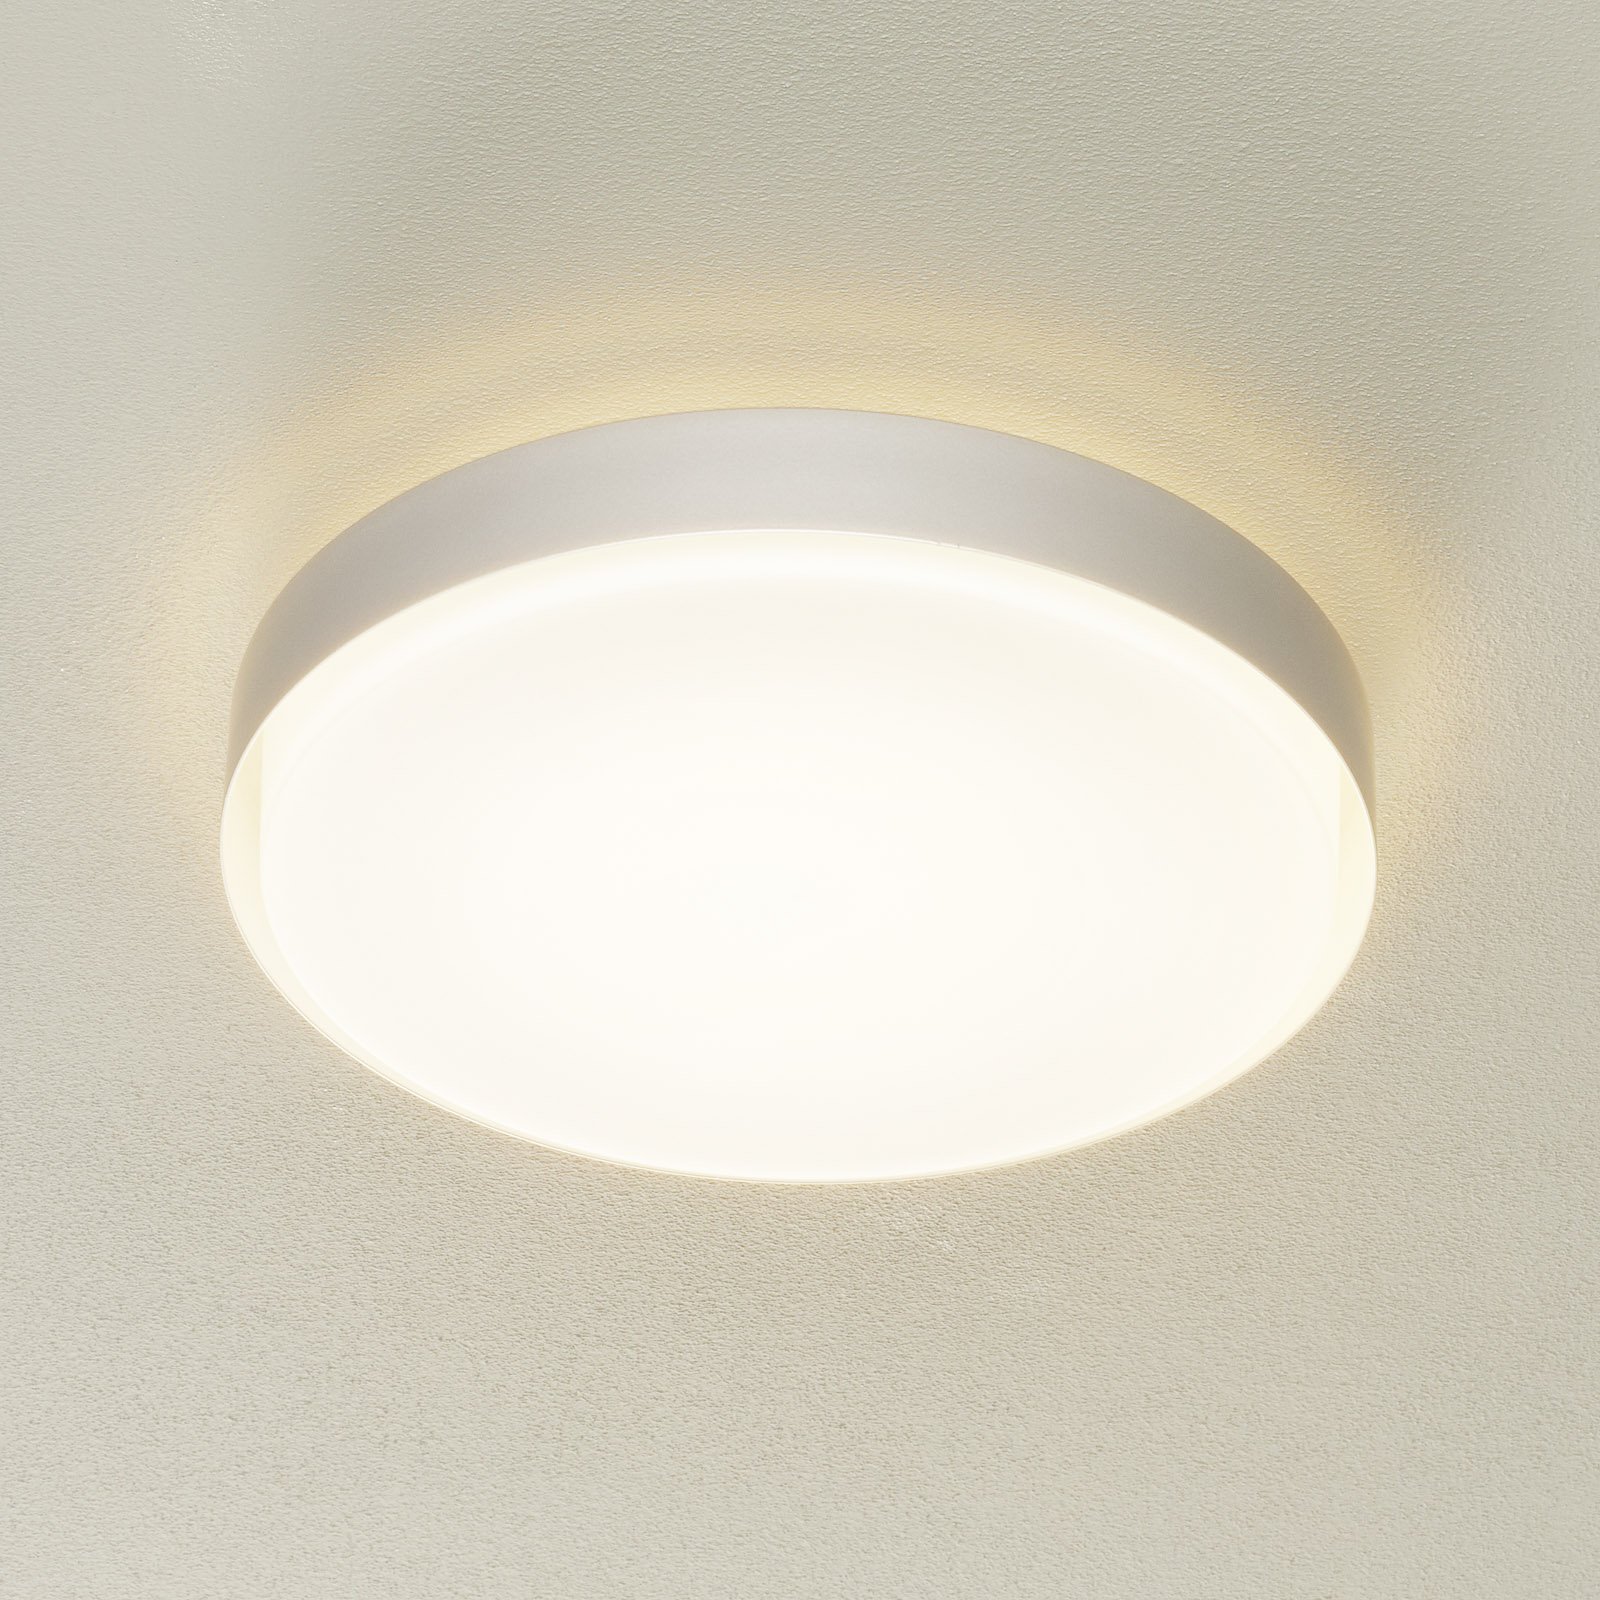 BEGA 34279 LED-Deckenleuchte, alu, Ø 42 cm, DALI